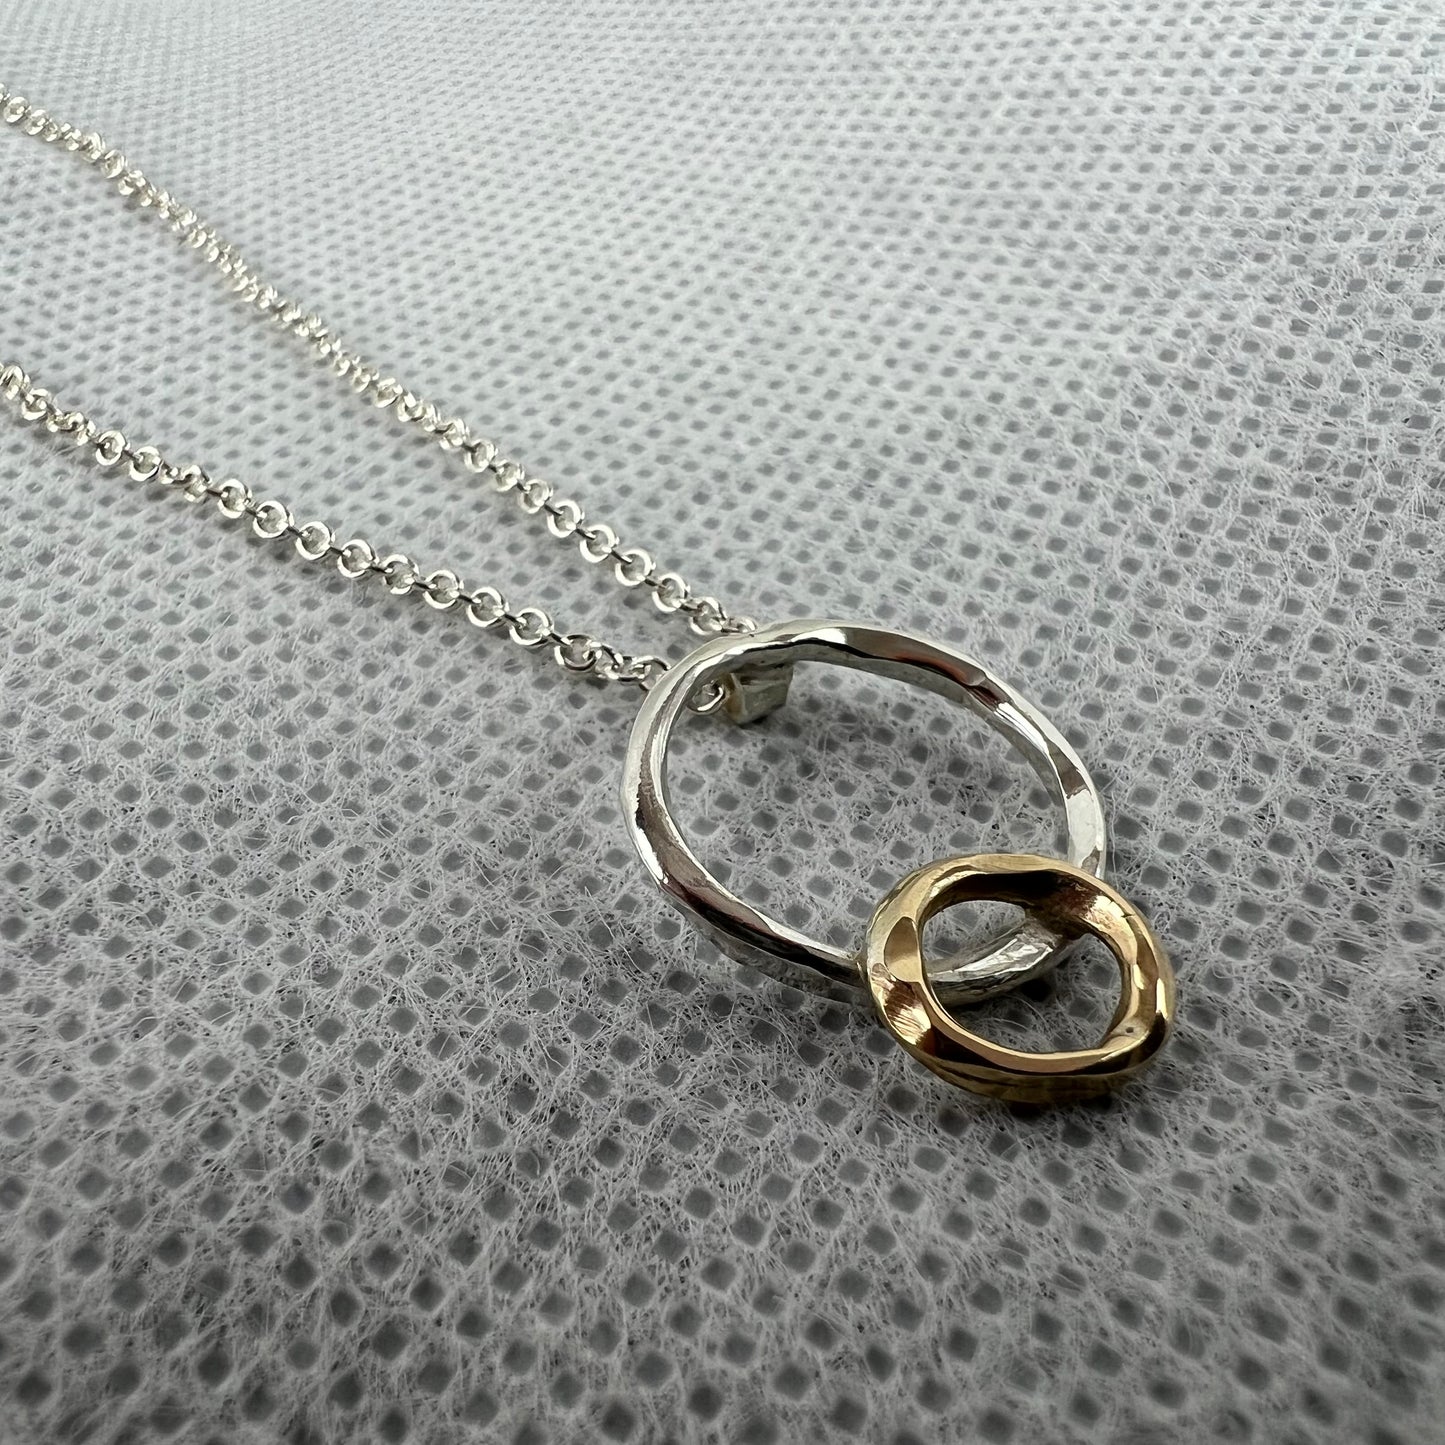 Kelly-Hopkins, Deborah – Silver and Gold Necklace